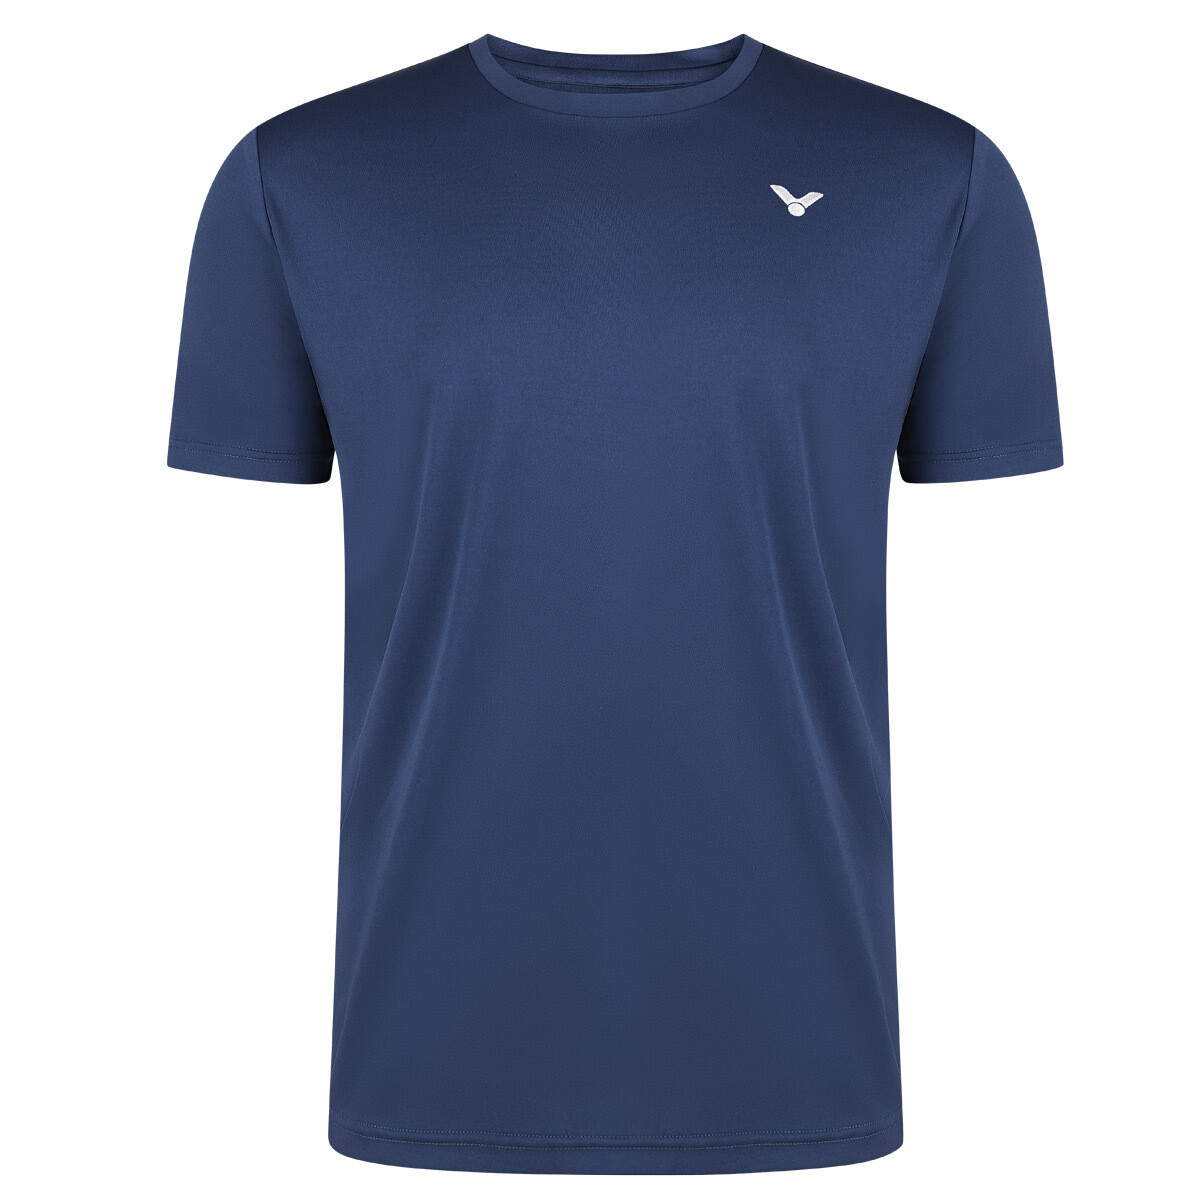 Victor T-Shirt T-13102 B Unisex - Blue, Size: M